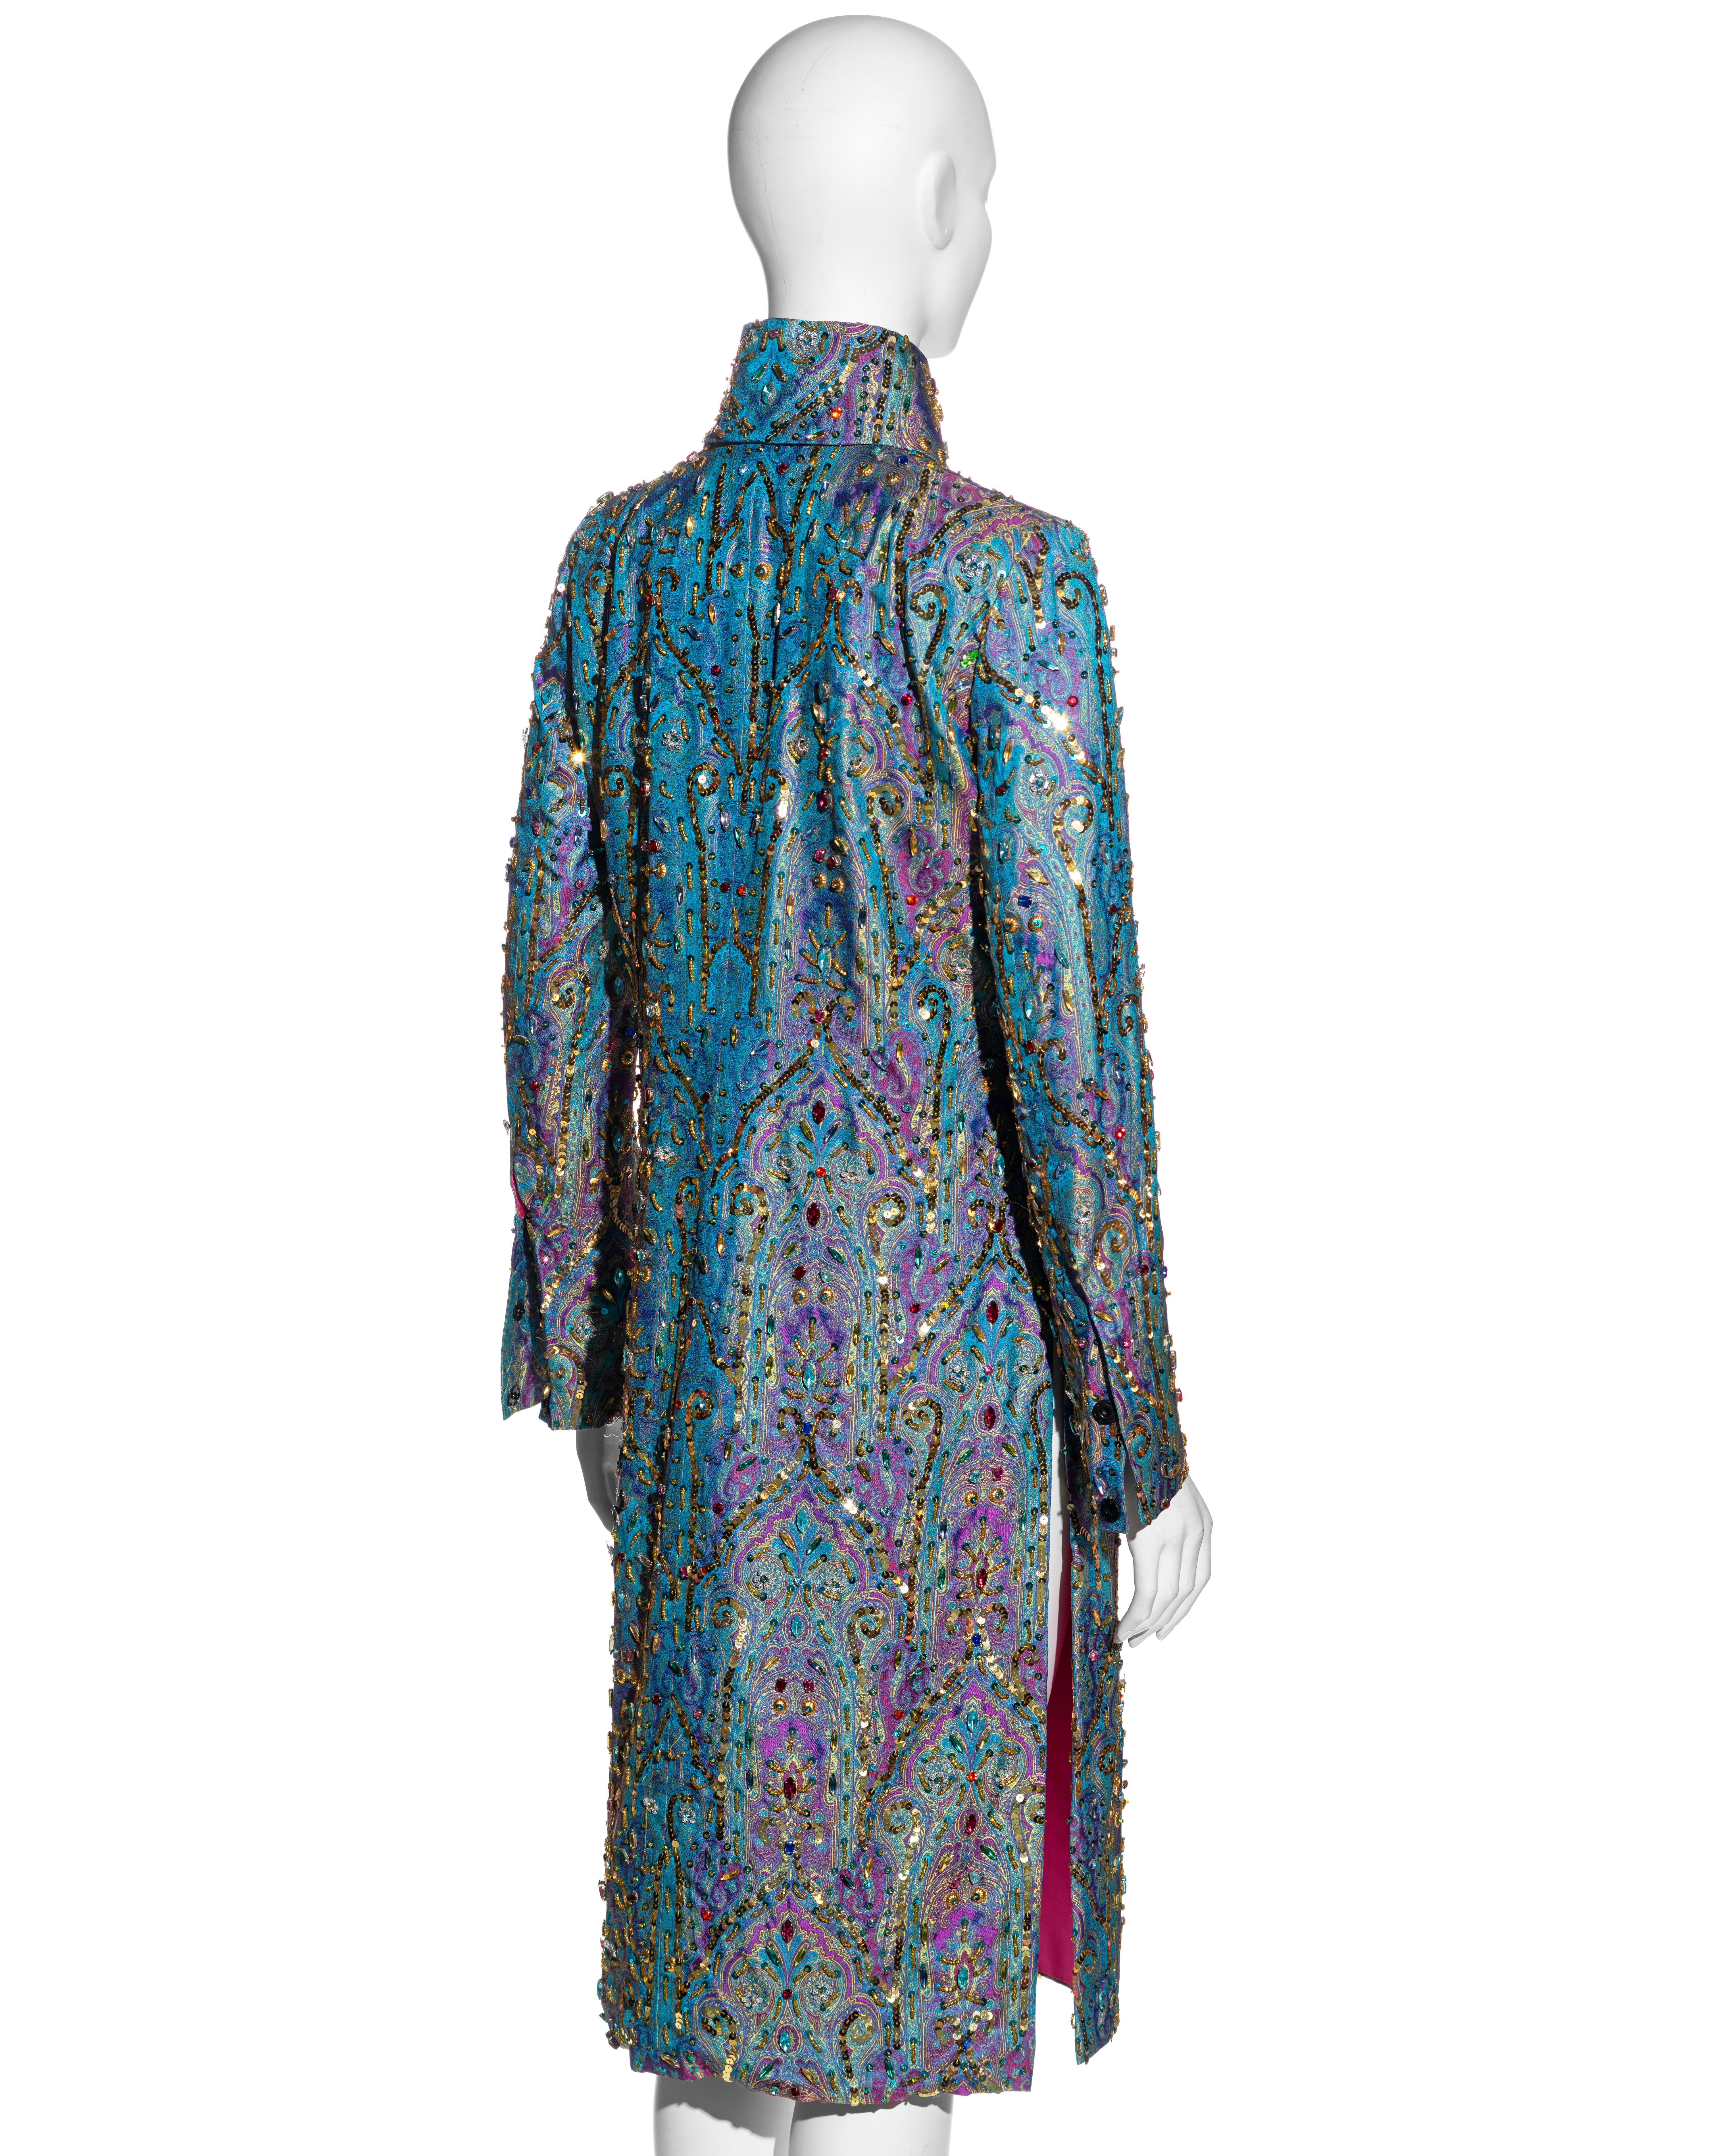 Dolce & Gabbana crystal embellished metallic silk brocade evening coat, ss 2000 For Sale 4